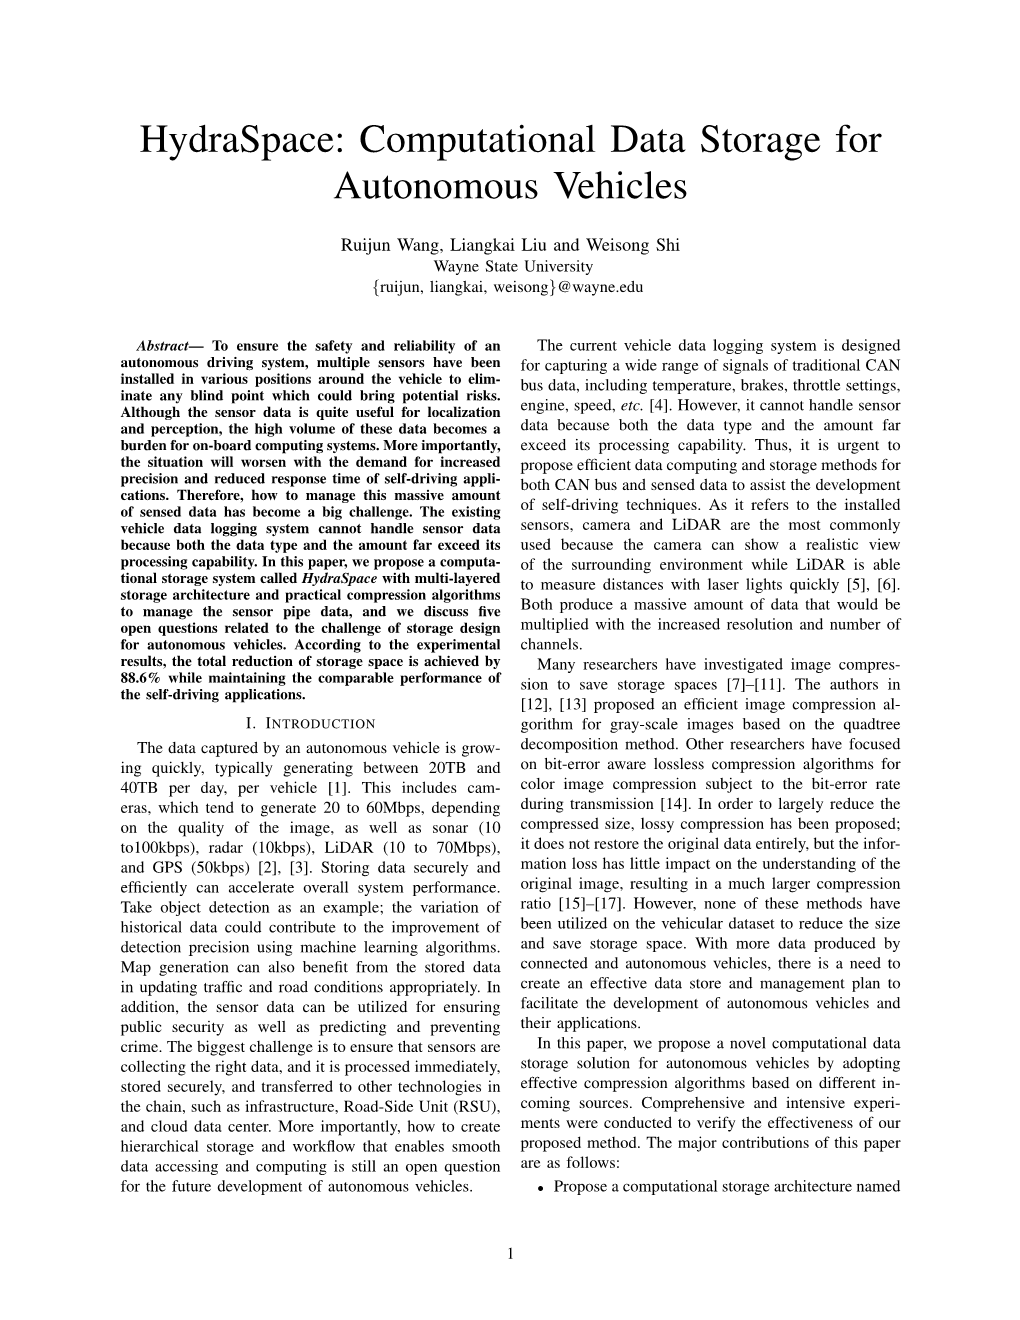 Hydraspace: Computational Data Storage for Autonomous Vehicles